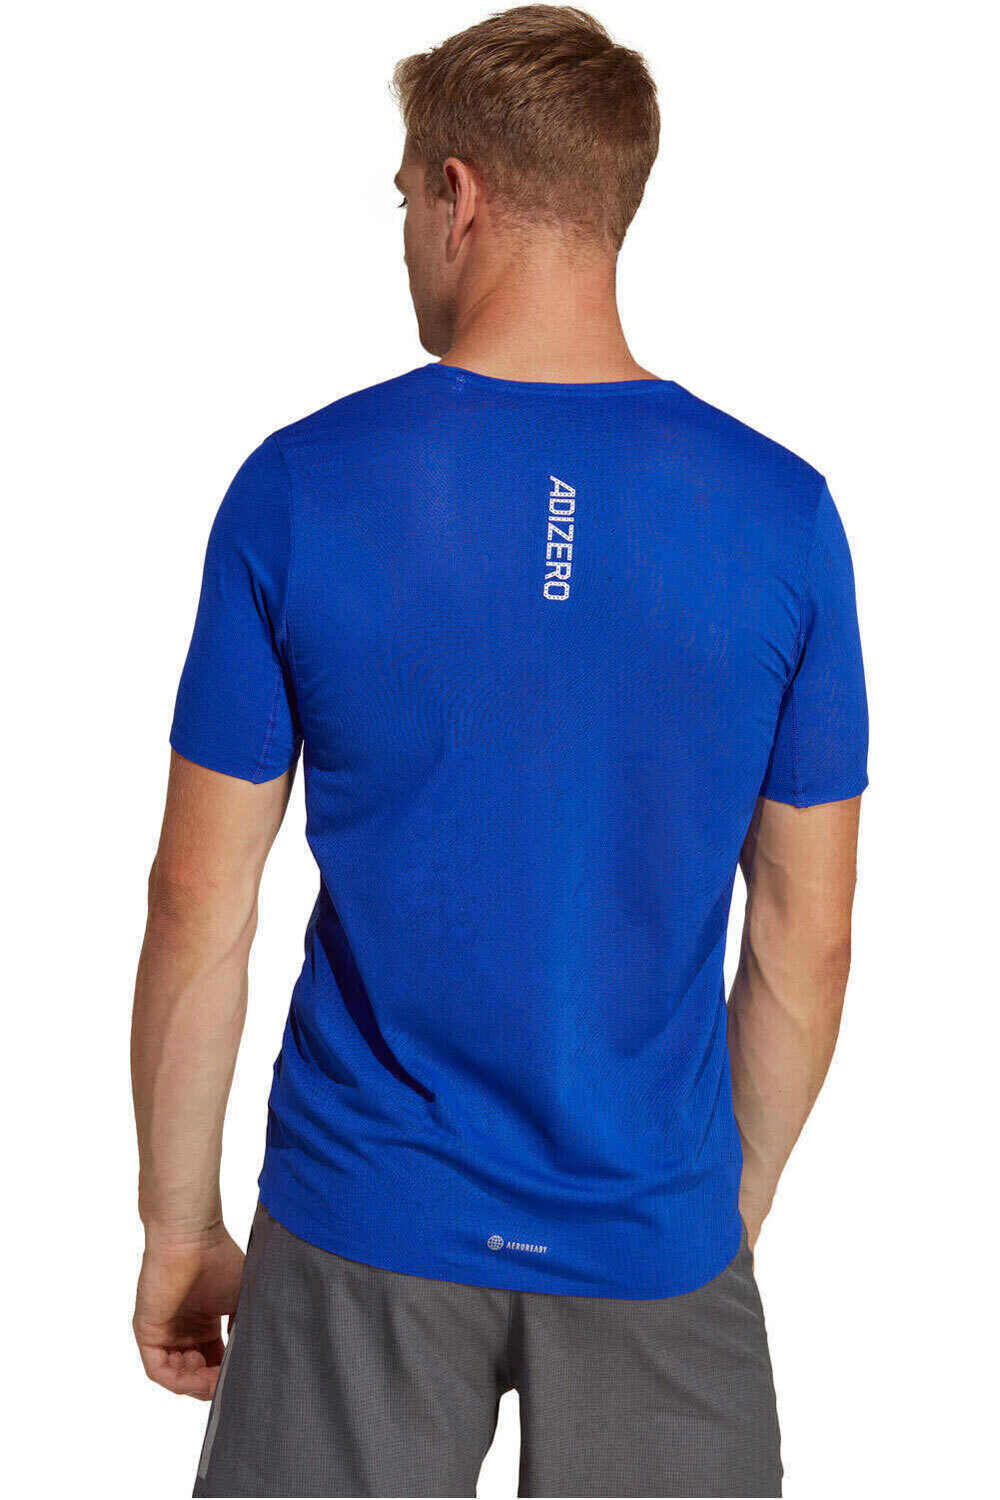 Adidas Adizero T-Shirt (HN8008) blue - Camisetas hombre